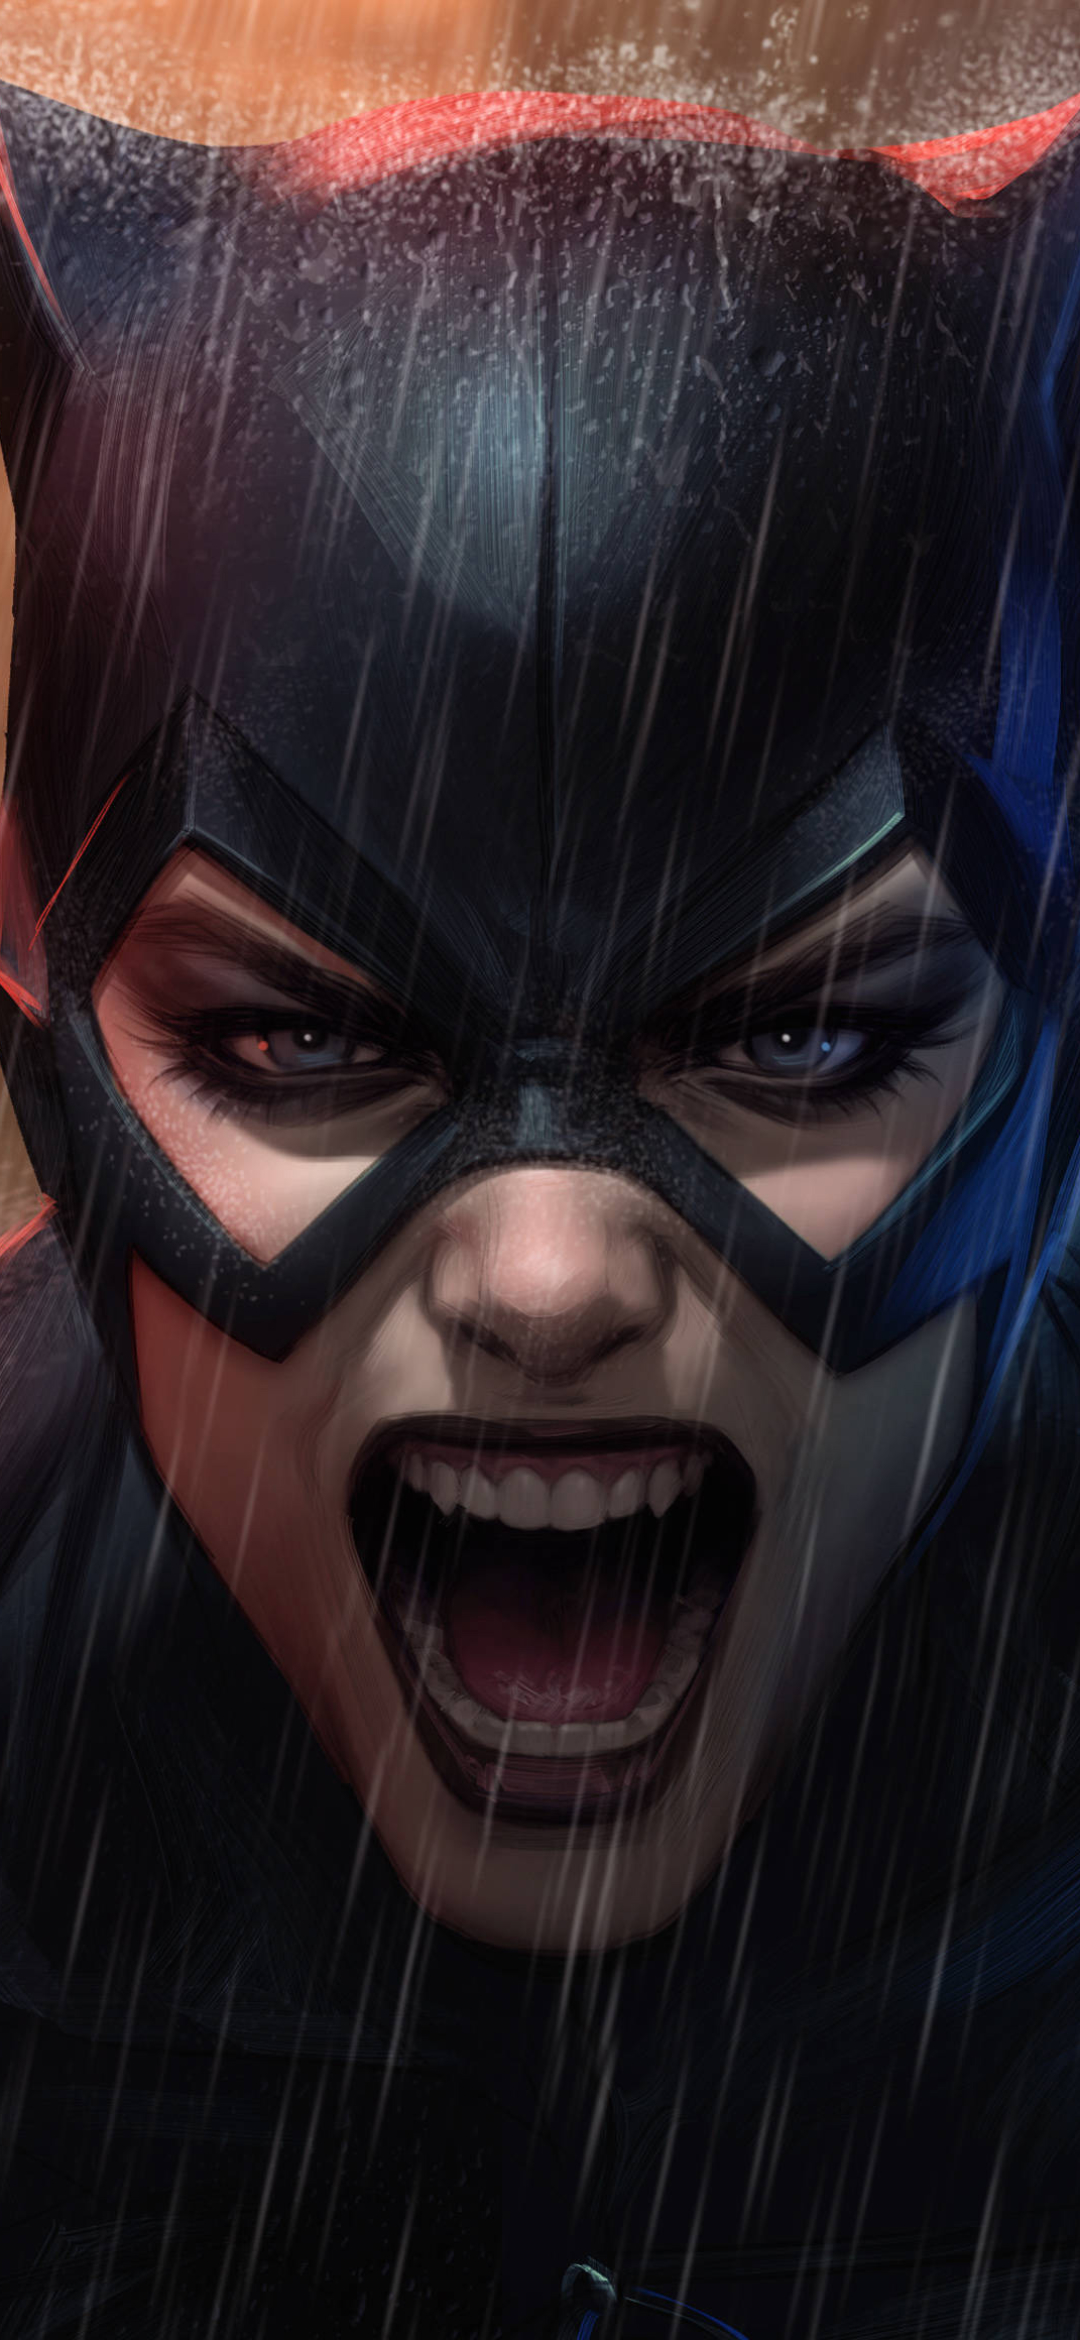 Descarga gratuita de fondo de pantalla para móvil de Lluvia, Catwoman, Historietas, Dc Comics.